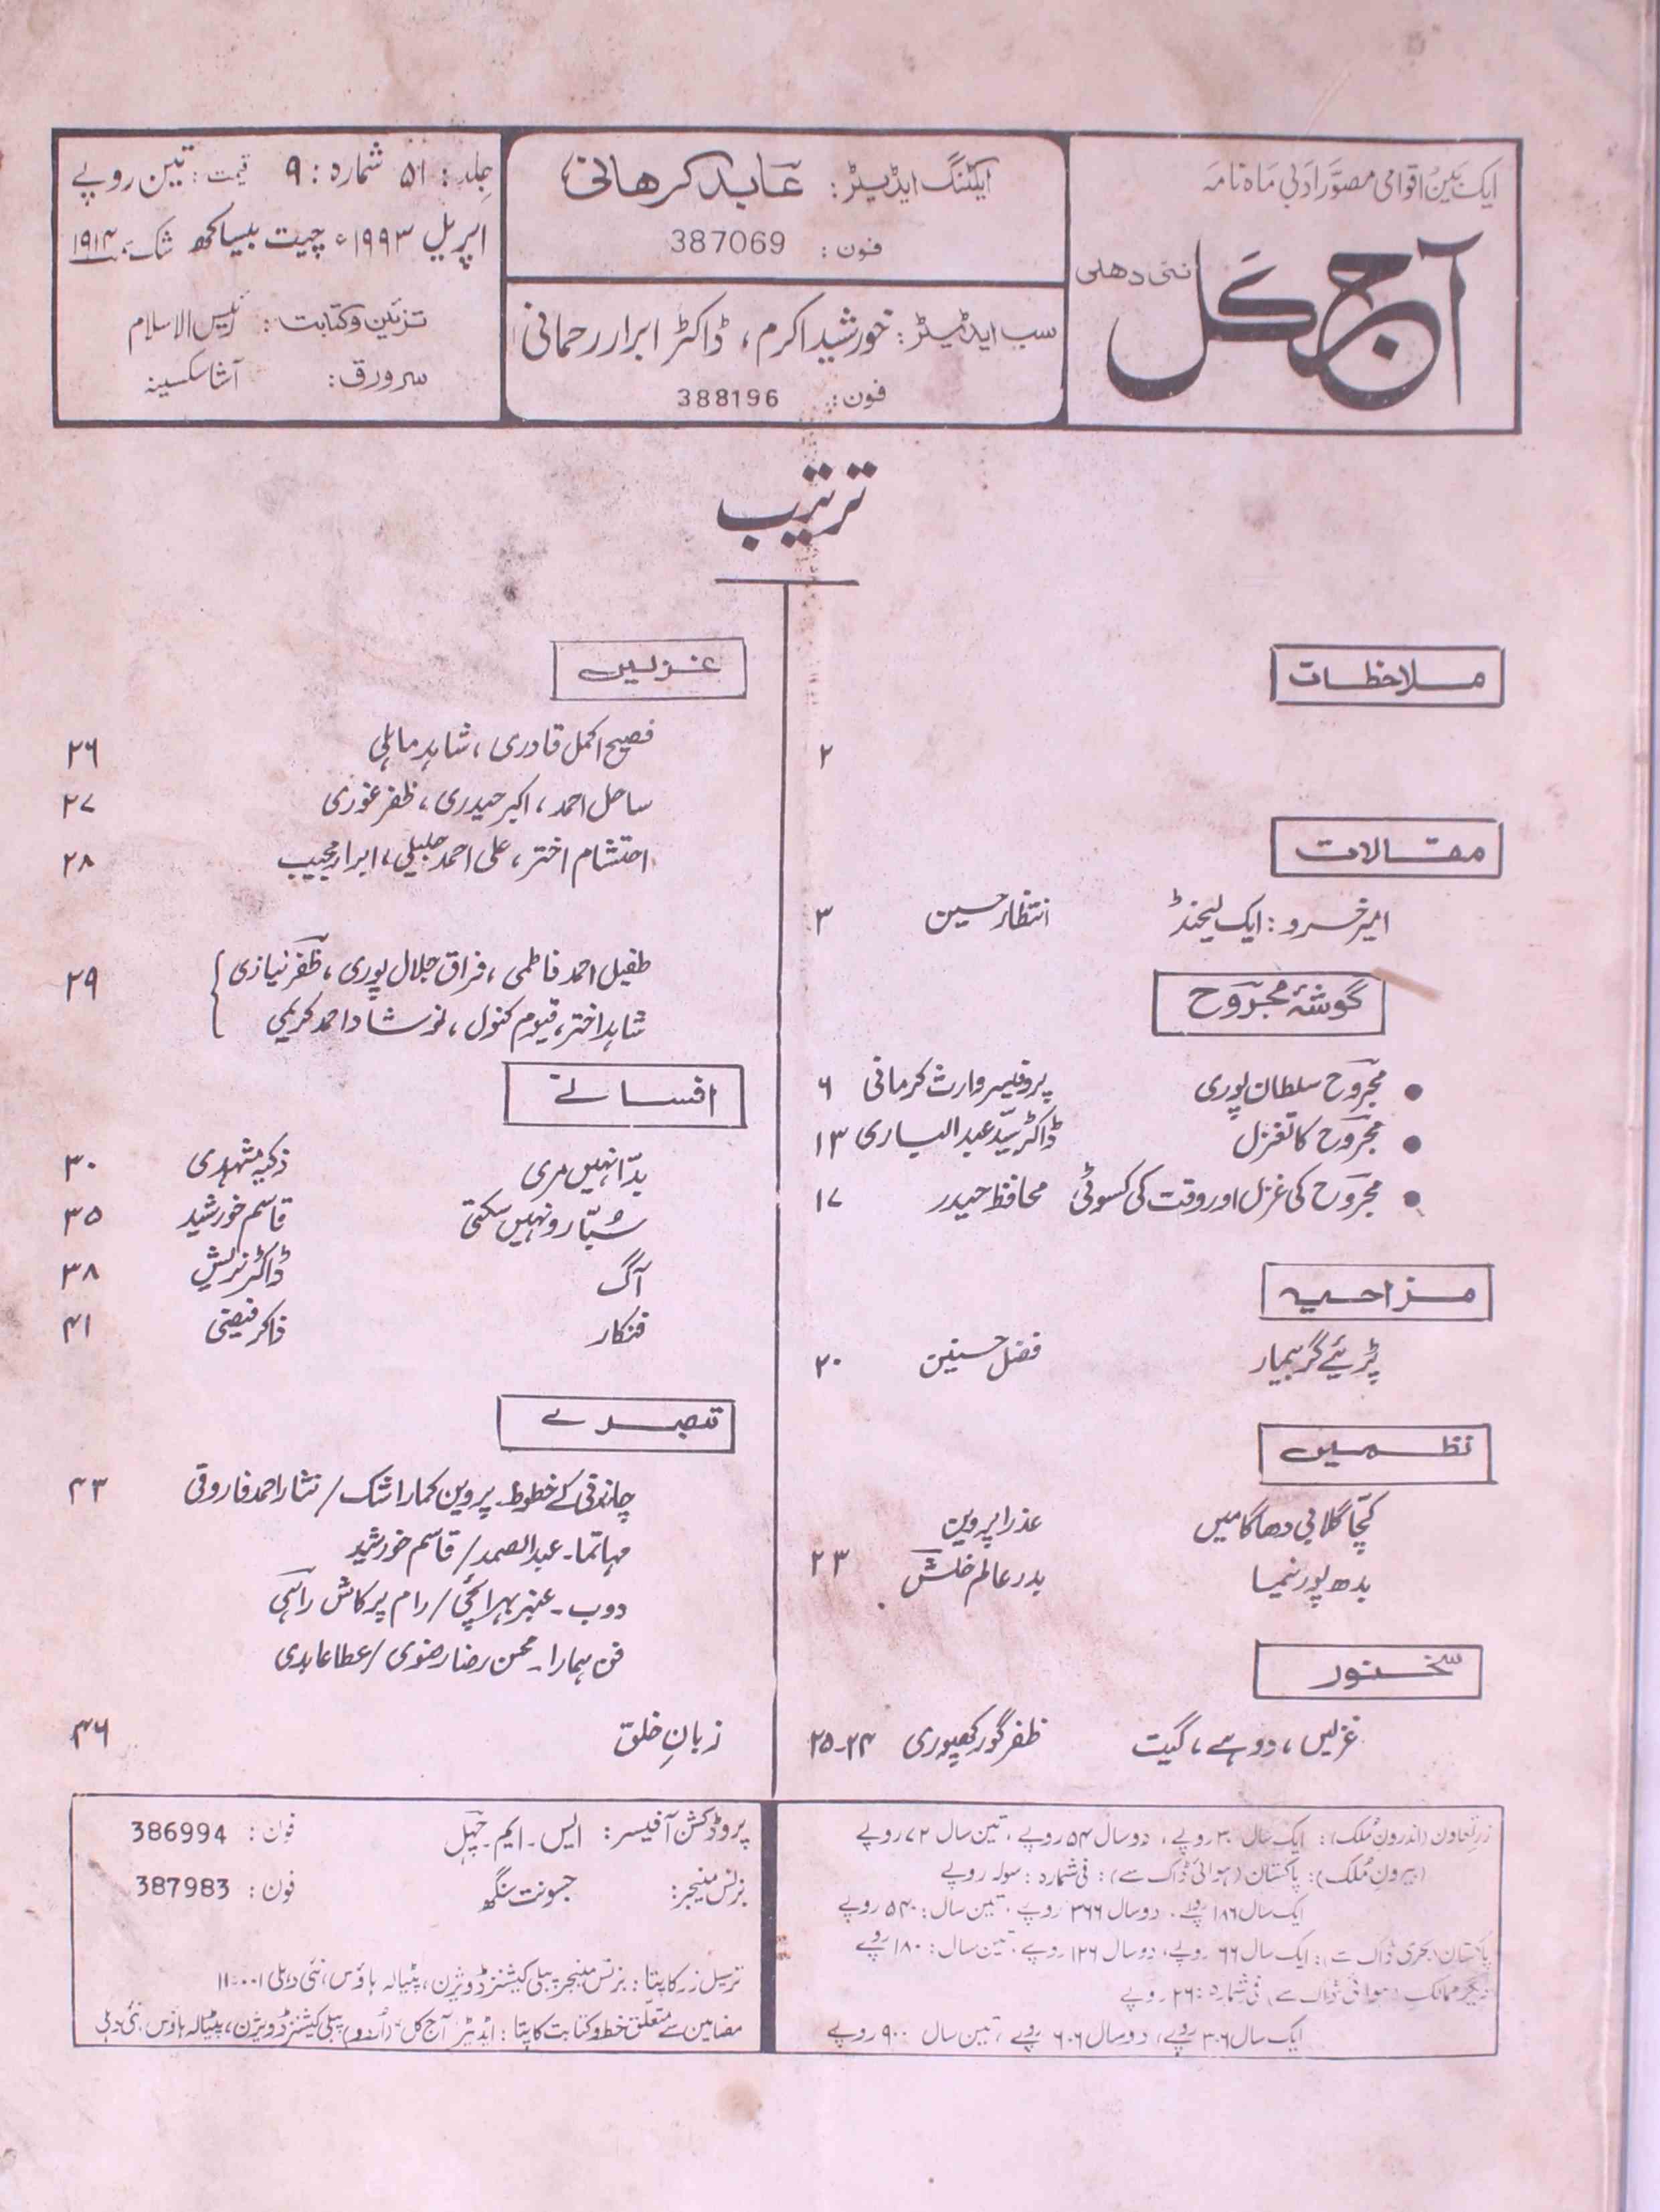 Aj Kal Jild 51 Shumara 9 April 1993